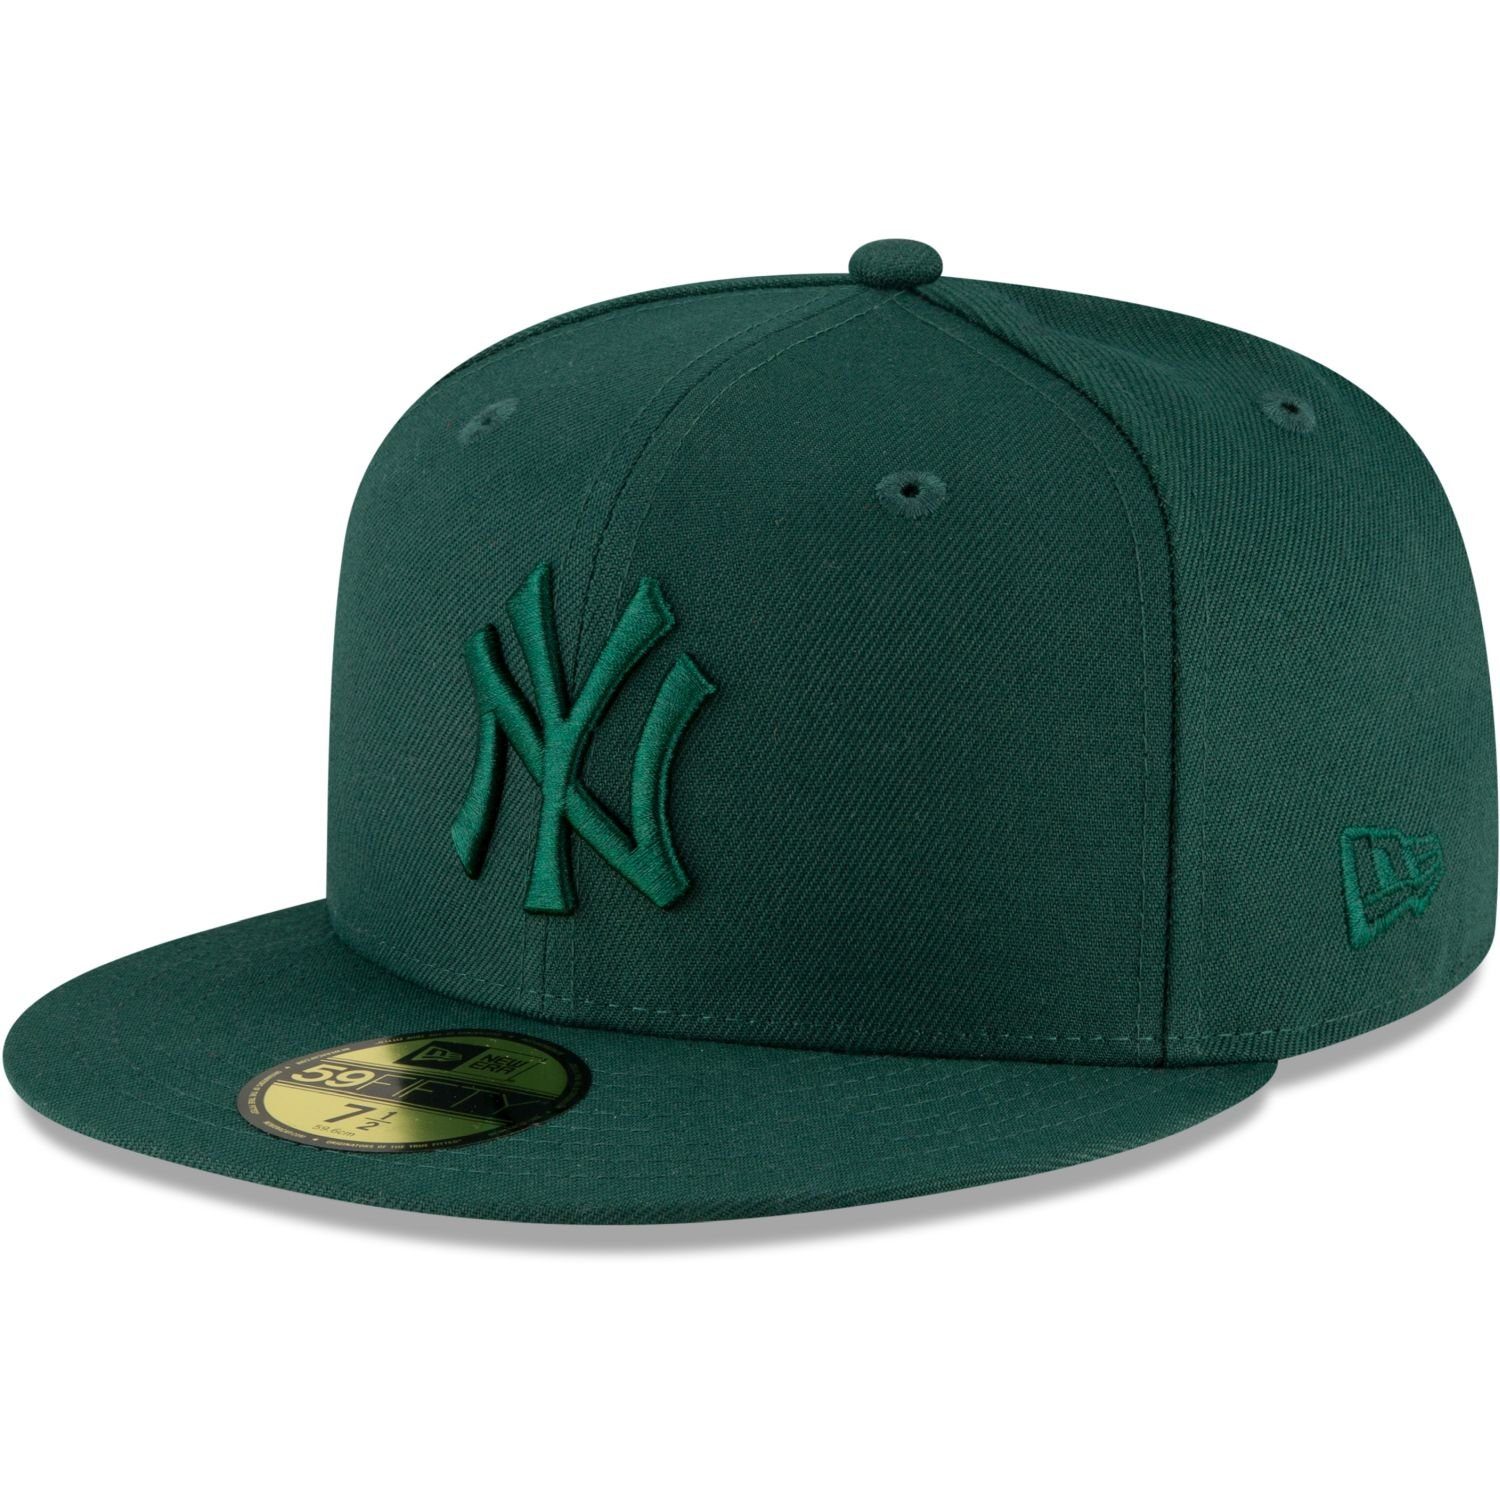 New Era Fitted Cap 59Fifty MLB New York Yankees dunkelgrün